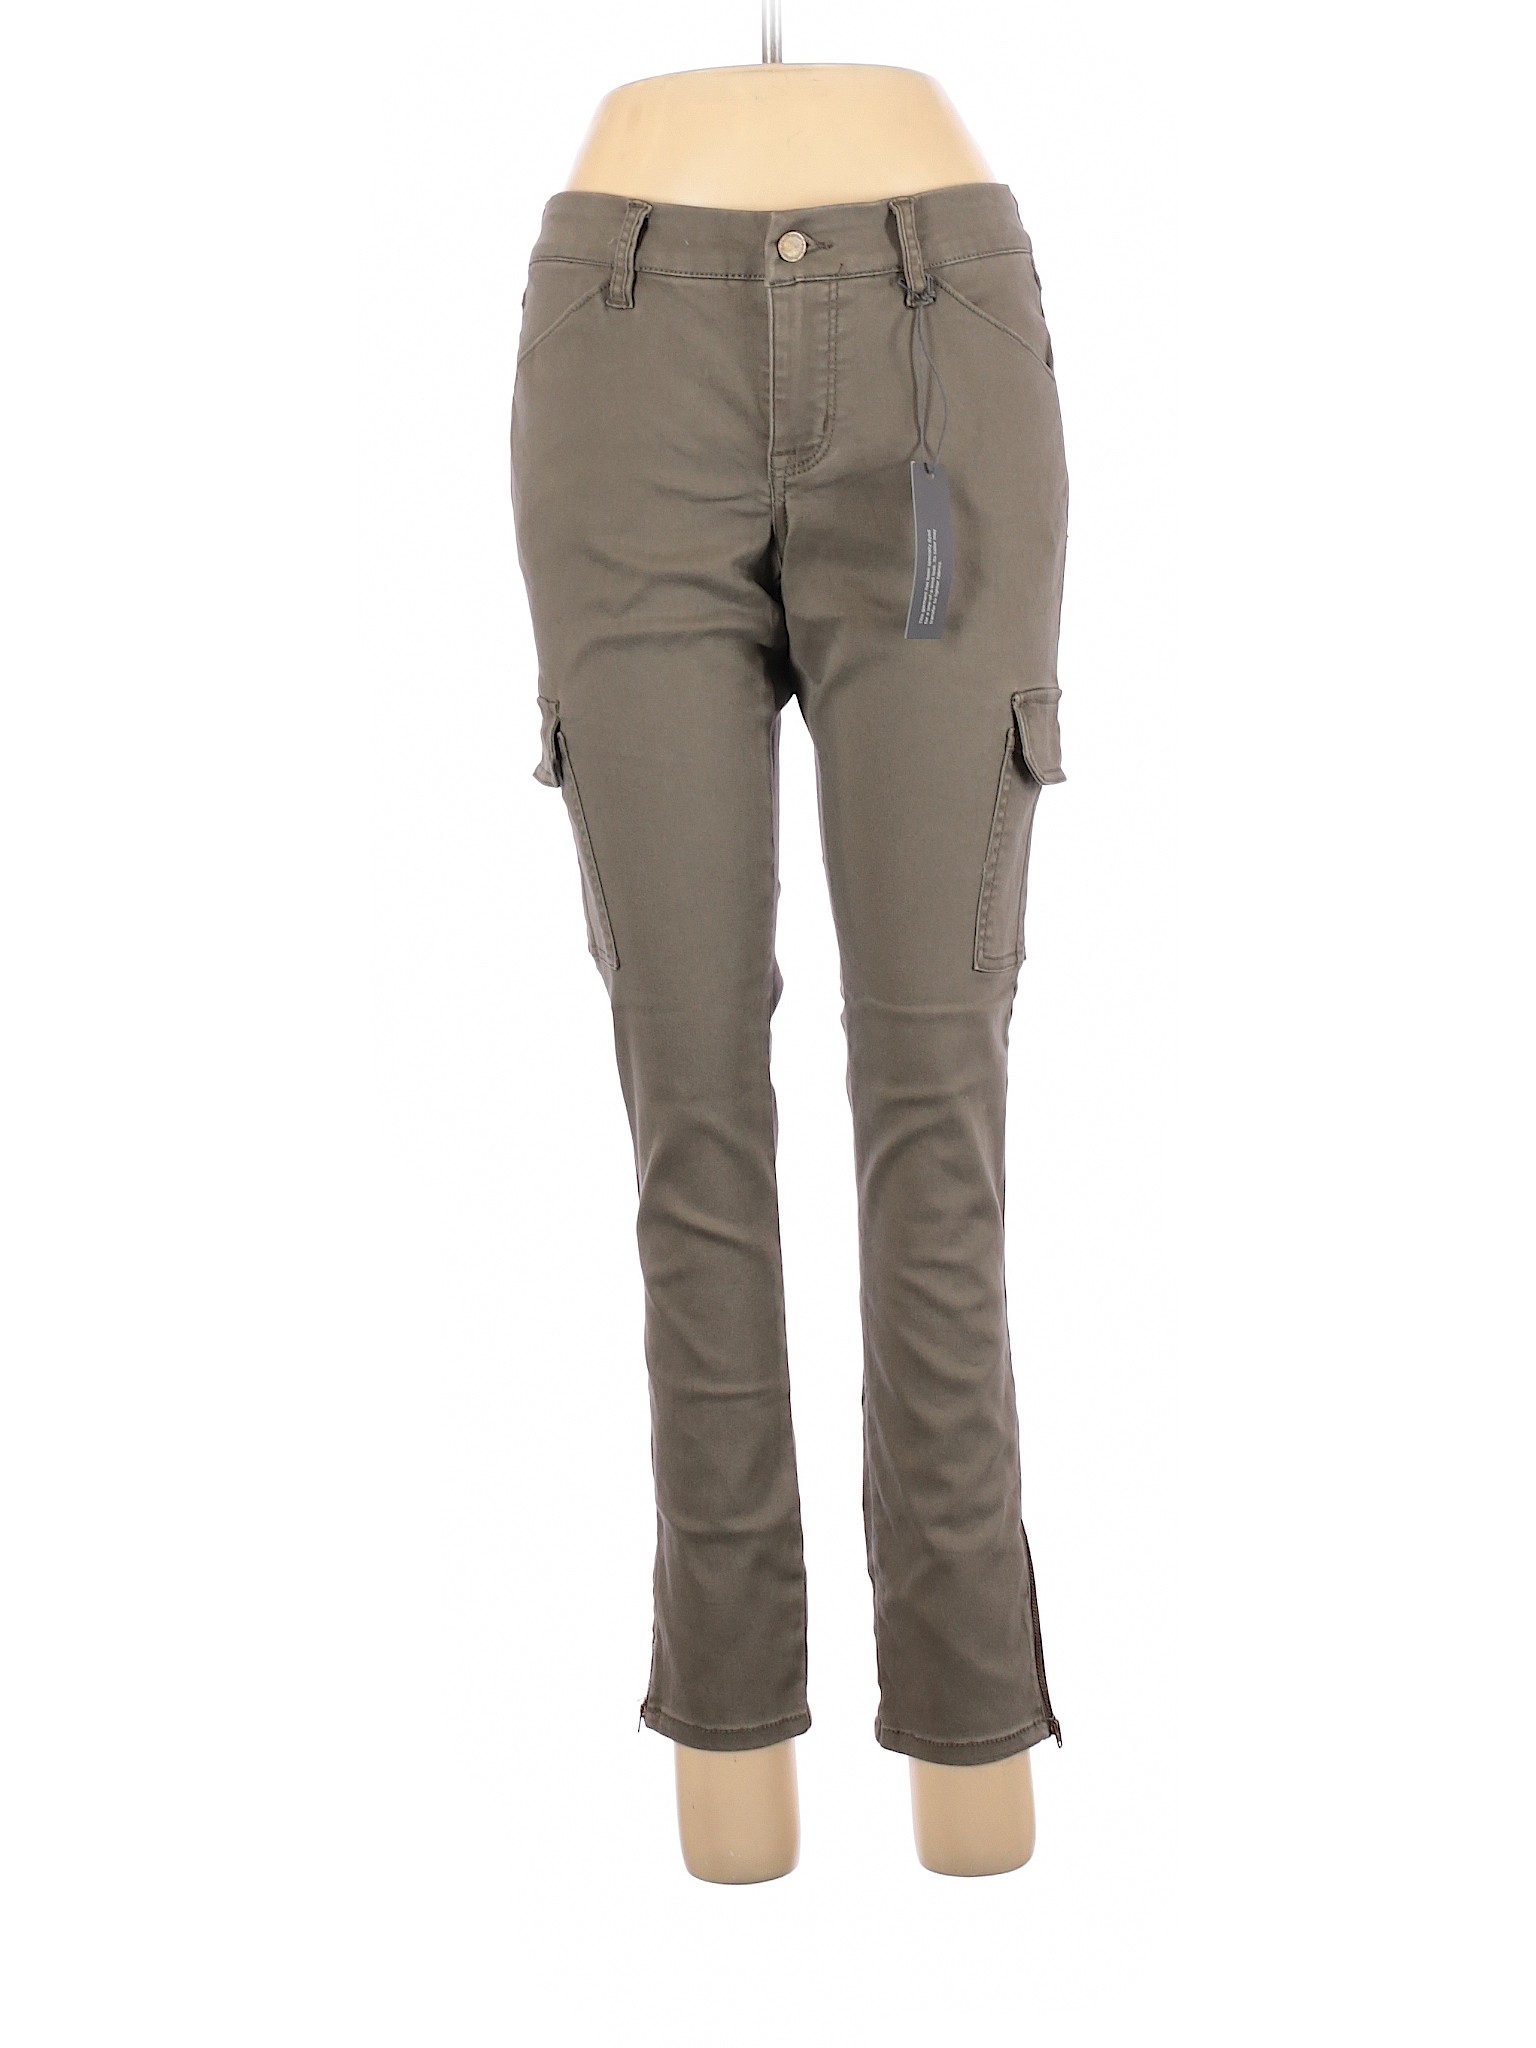 NWT Market and Spruce Women Green Cargo Pants 6 | eBay